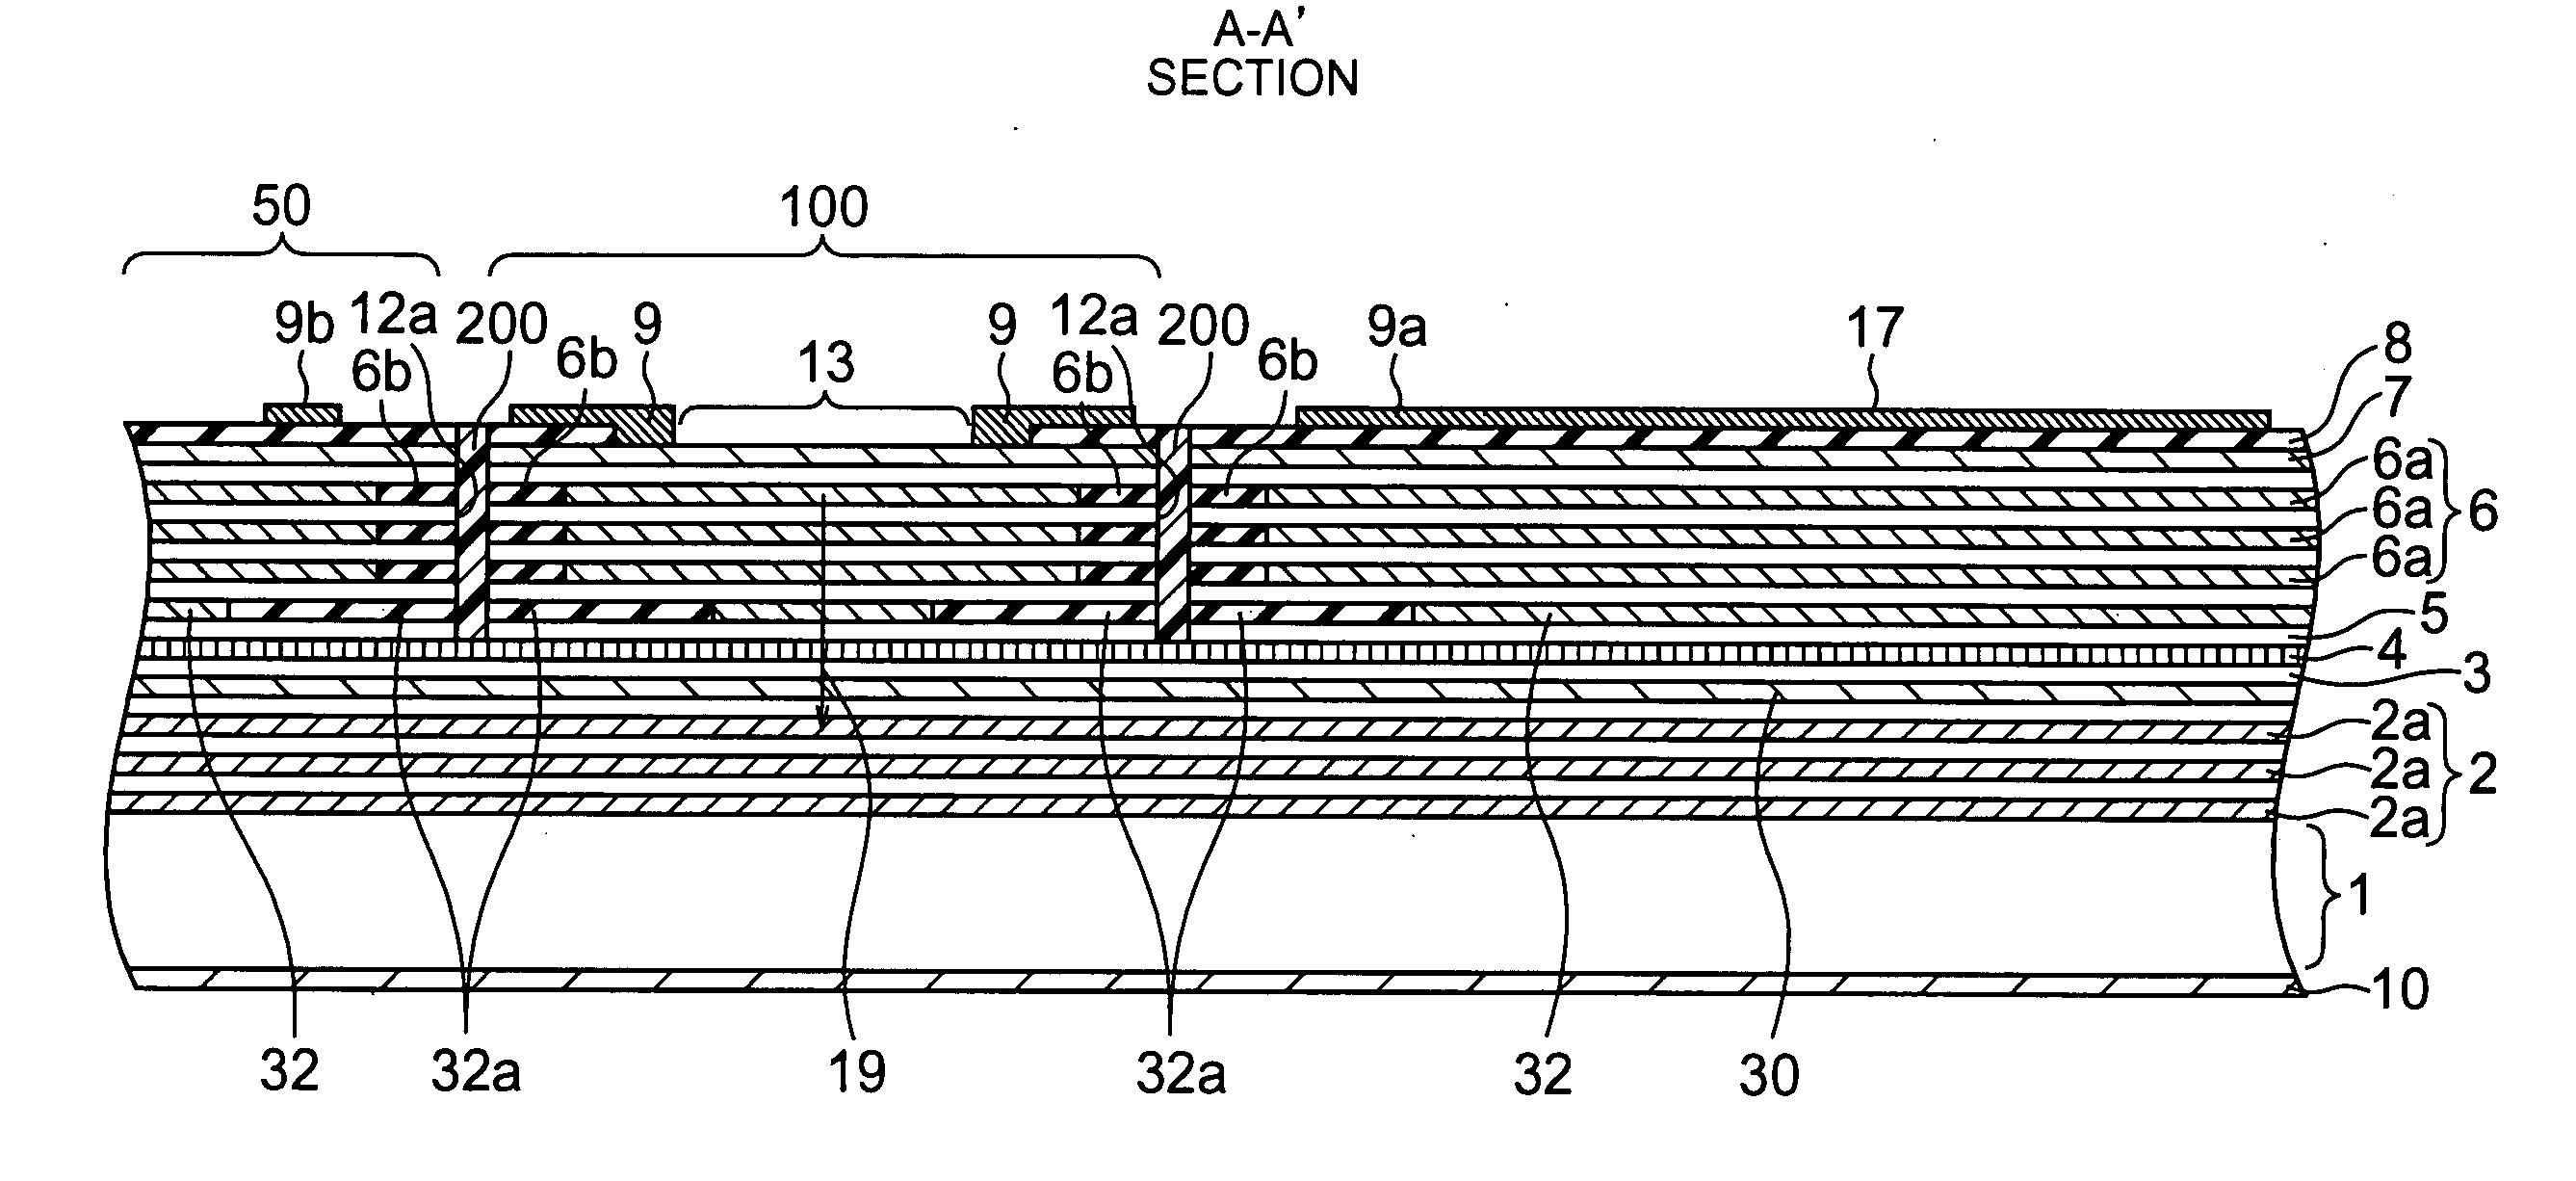 Vertical cavity surface emitting laser diode